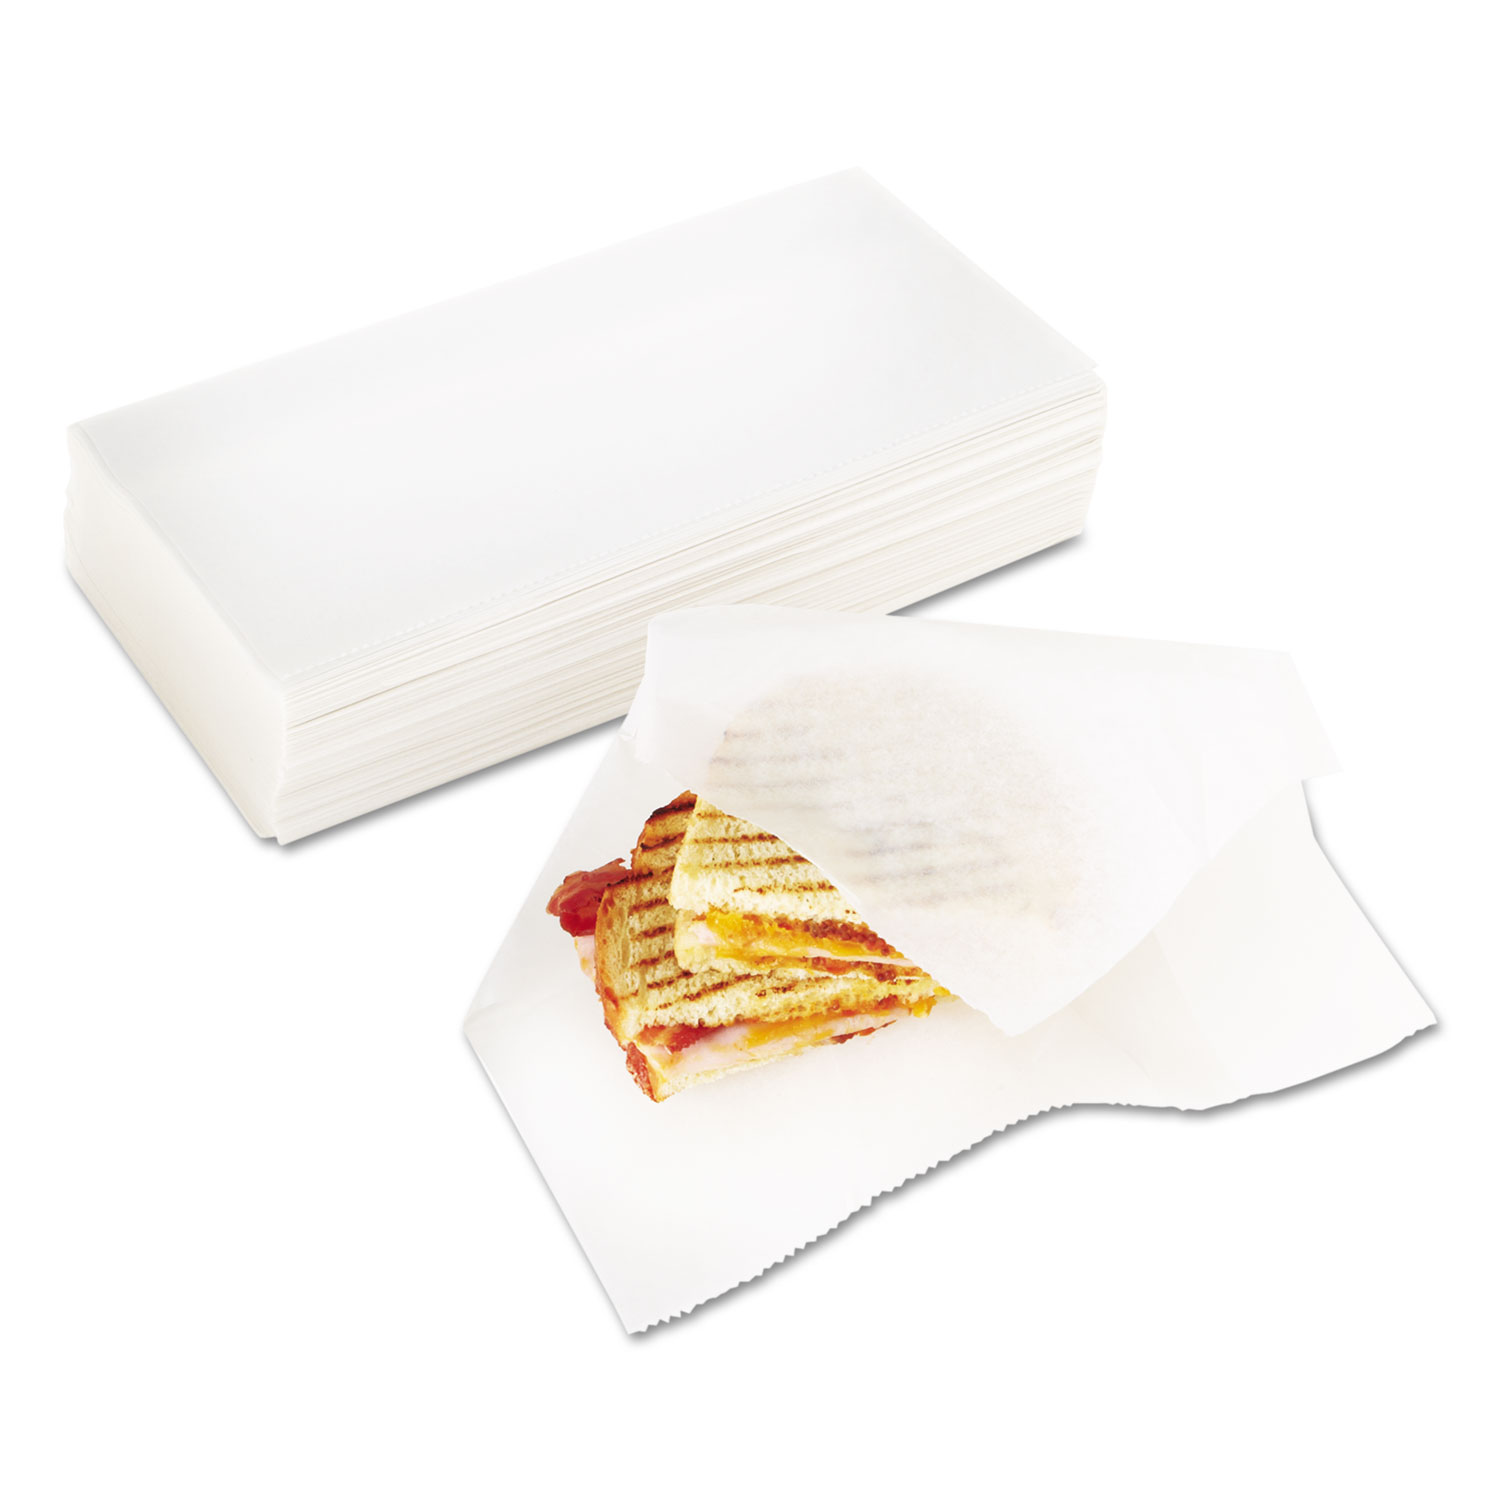 Interfold-Sheet Deli Paper, 10 x 10 3/4, White, 500 Sheets/Box, 12 Box/Carton